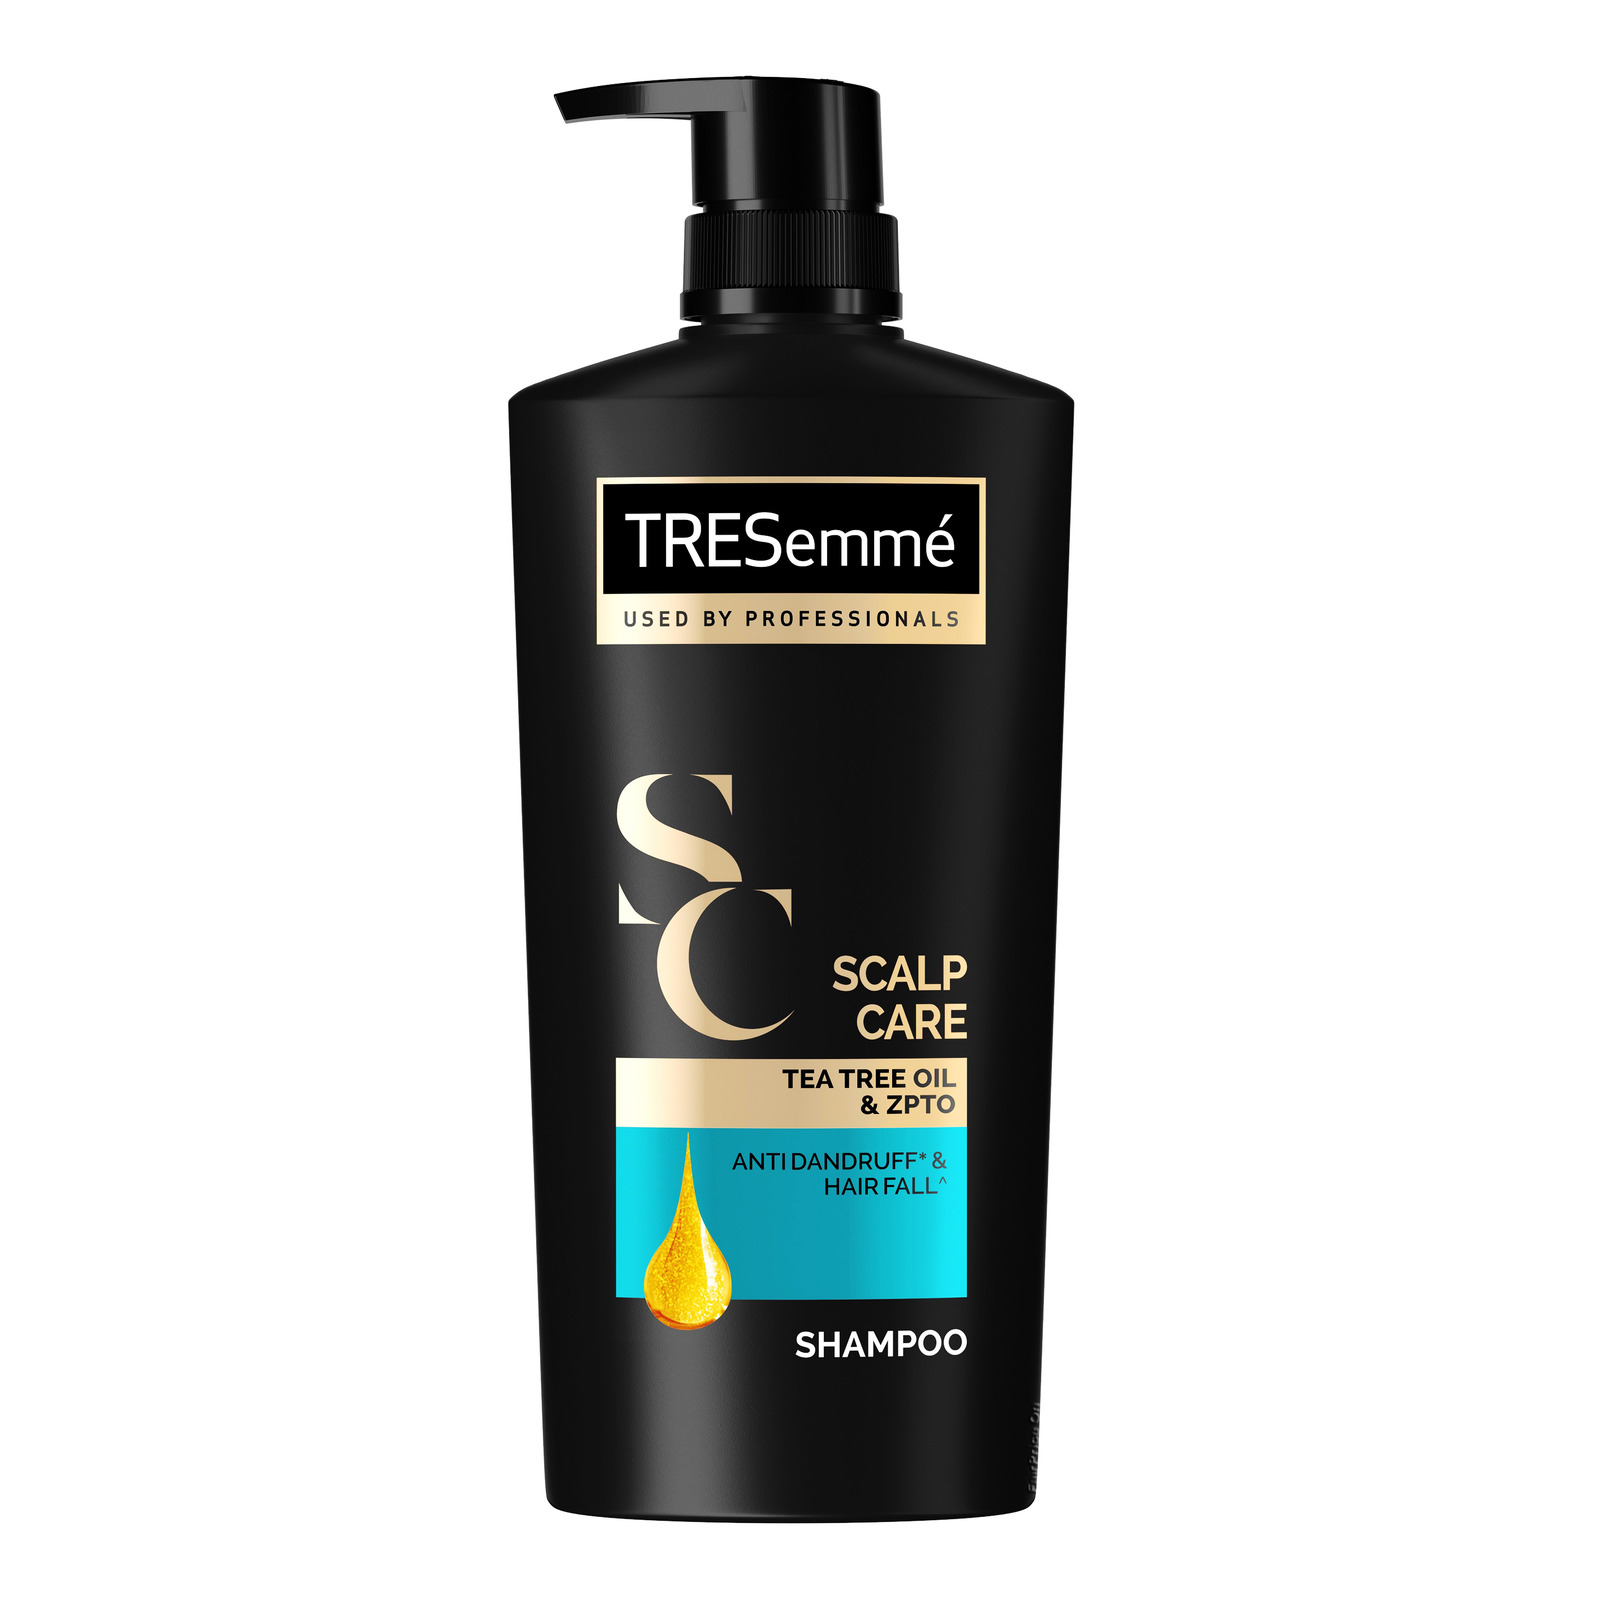 TRESemme Shampoo - Scalp Care